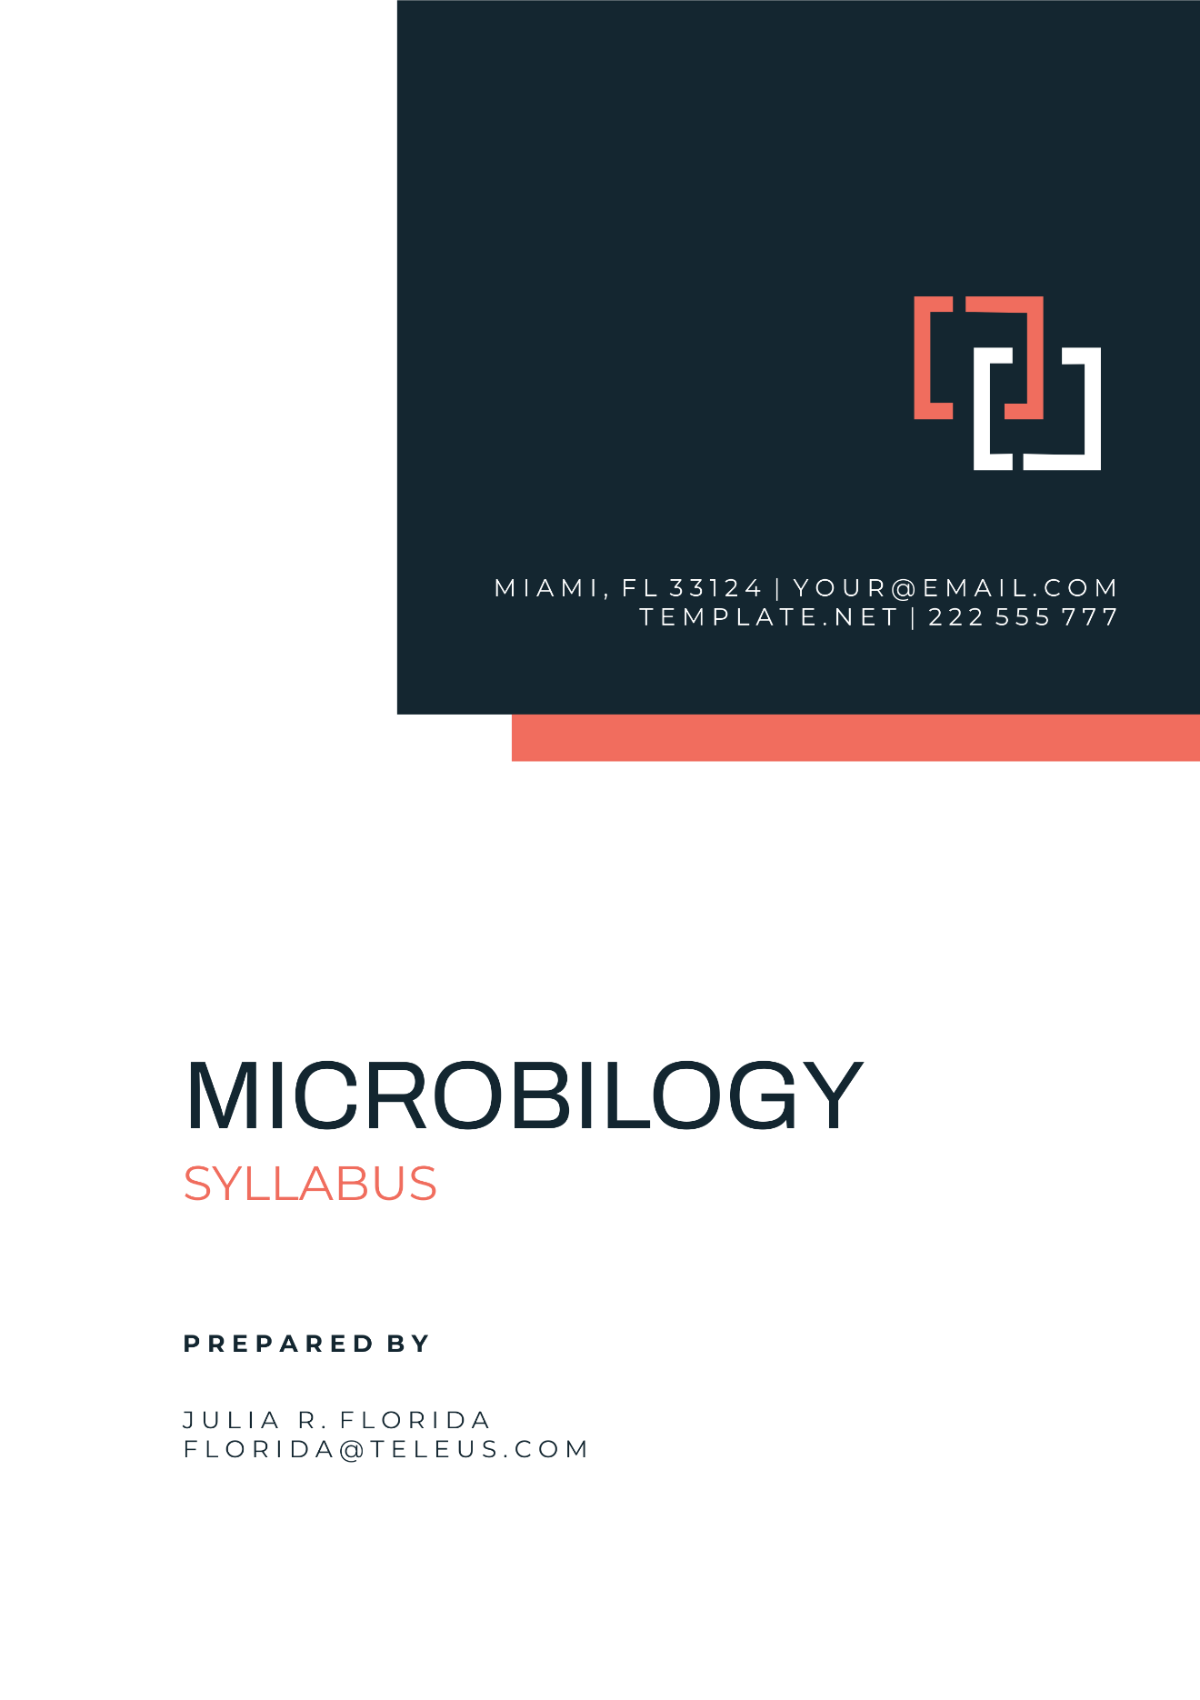 Microbiology Syllabus Template